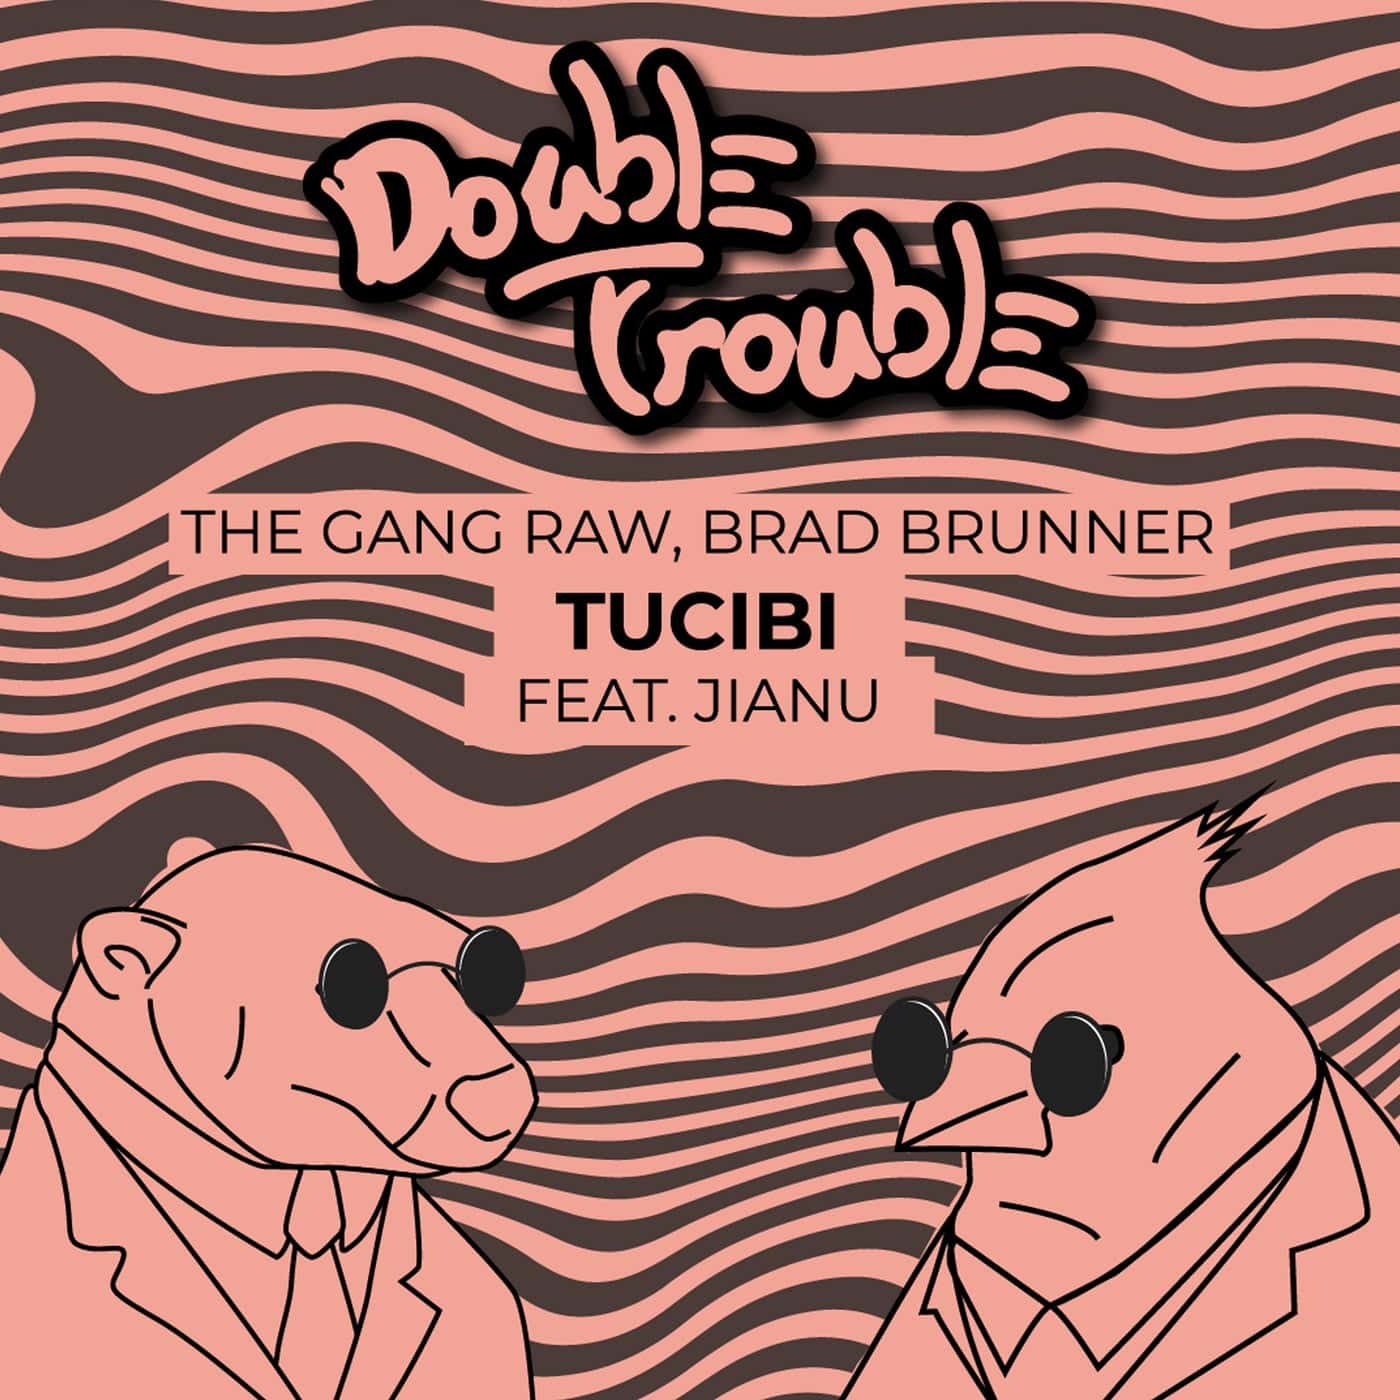 image cover: Brad Brunner, Jianu, The Gang Raw - Tucibi / DT014D